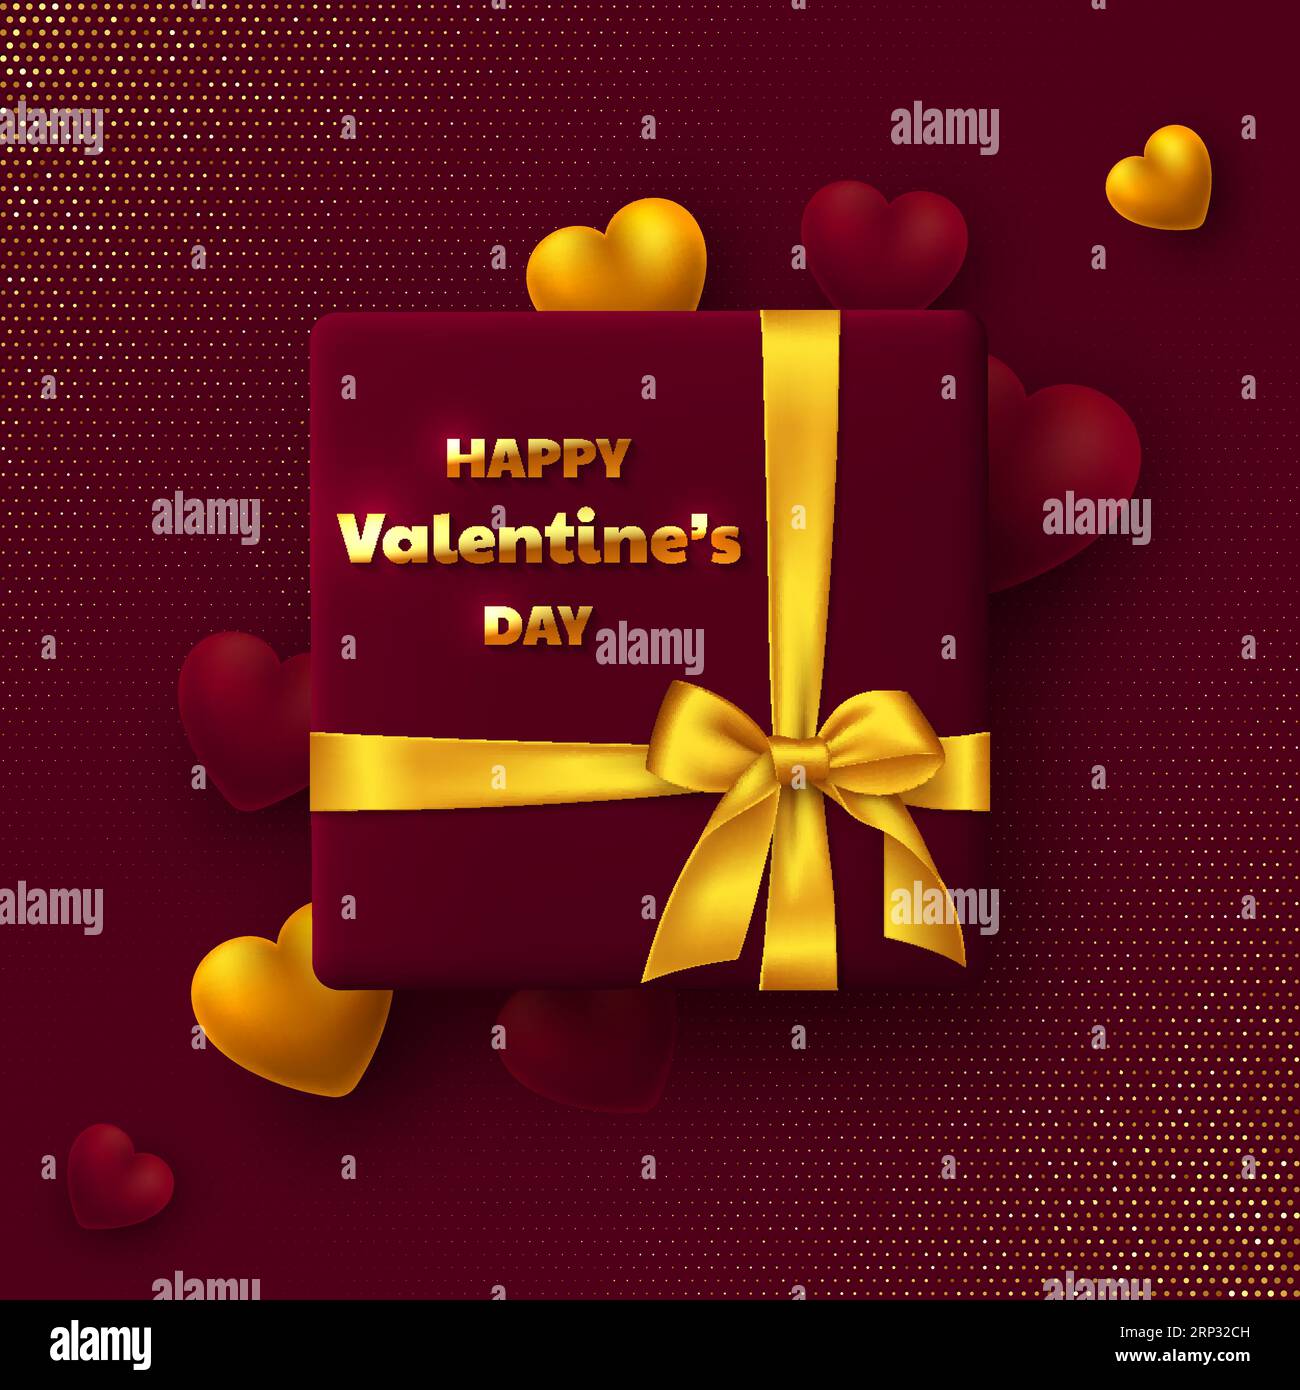 Burgundy ribbon stock image. Image of valentines, tail - 50570653